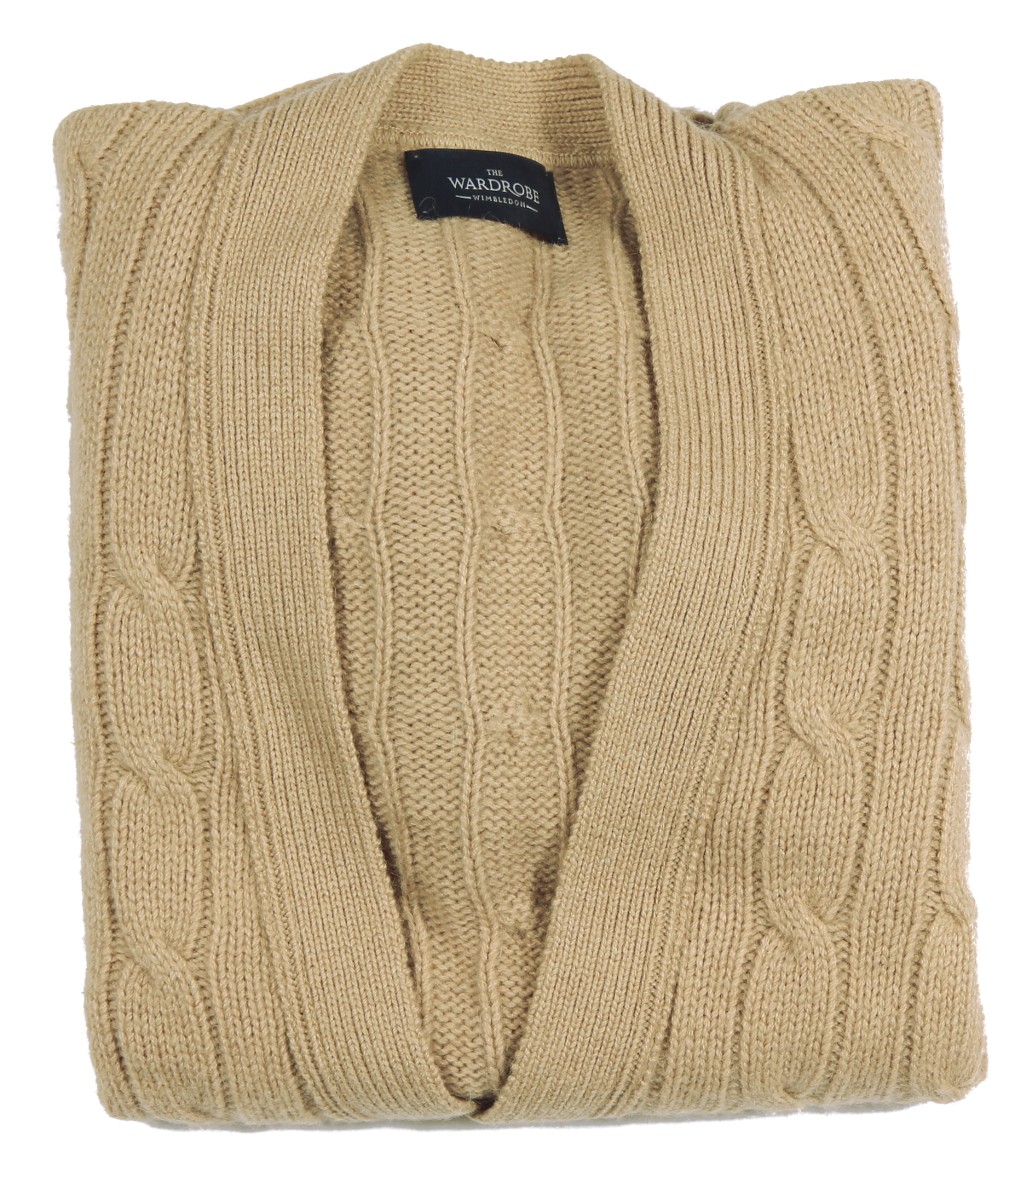 The Wardrobe Sweater: Medium Beige